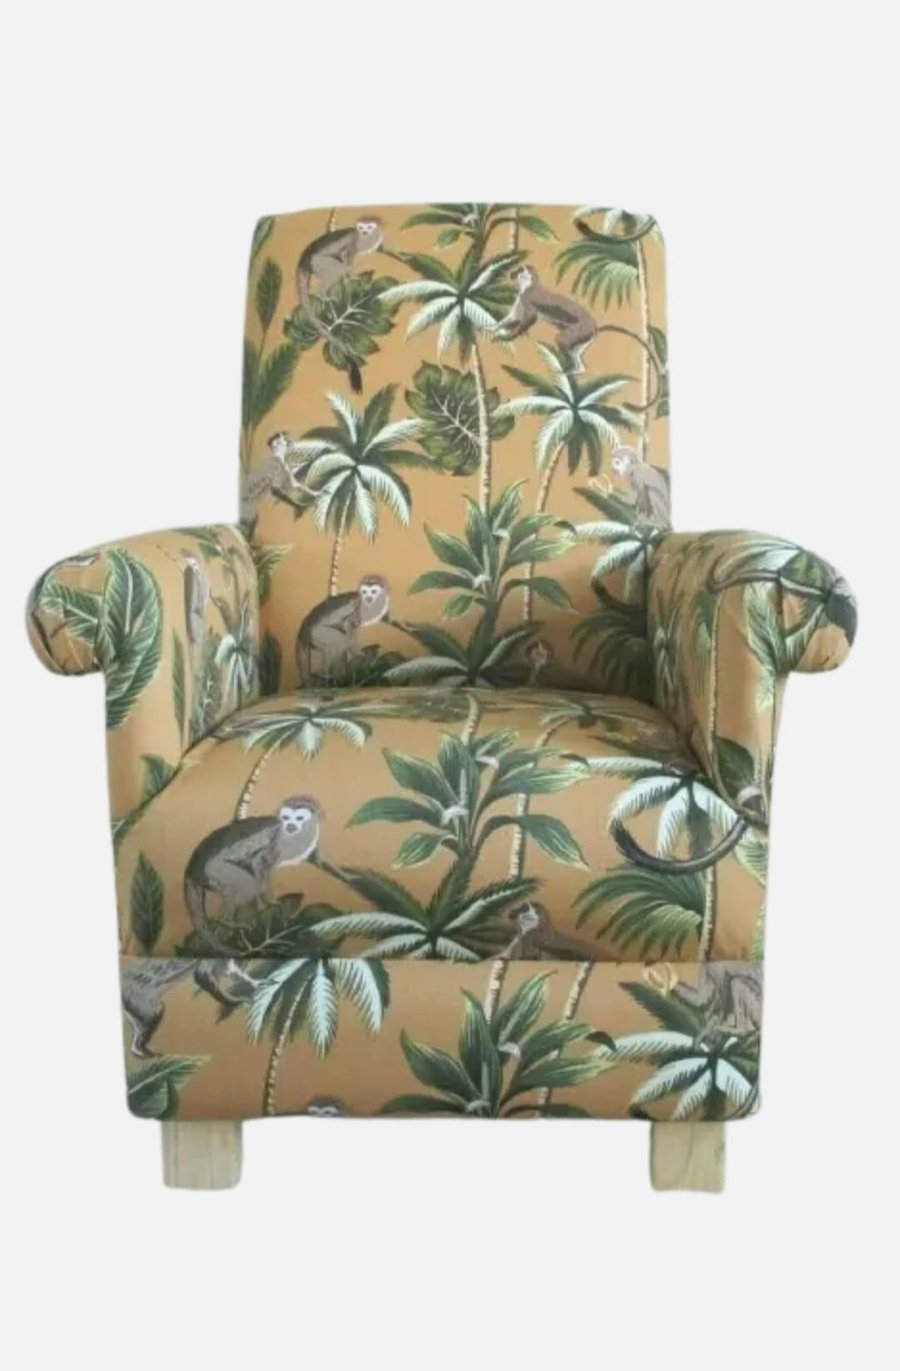 Monkeys Ochre Armchair Adult Chair Fryetts Mustard Fabric Animals Jungle Apes